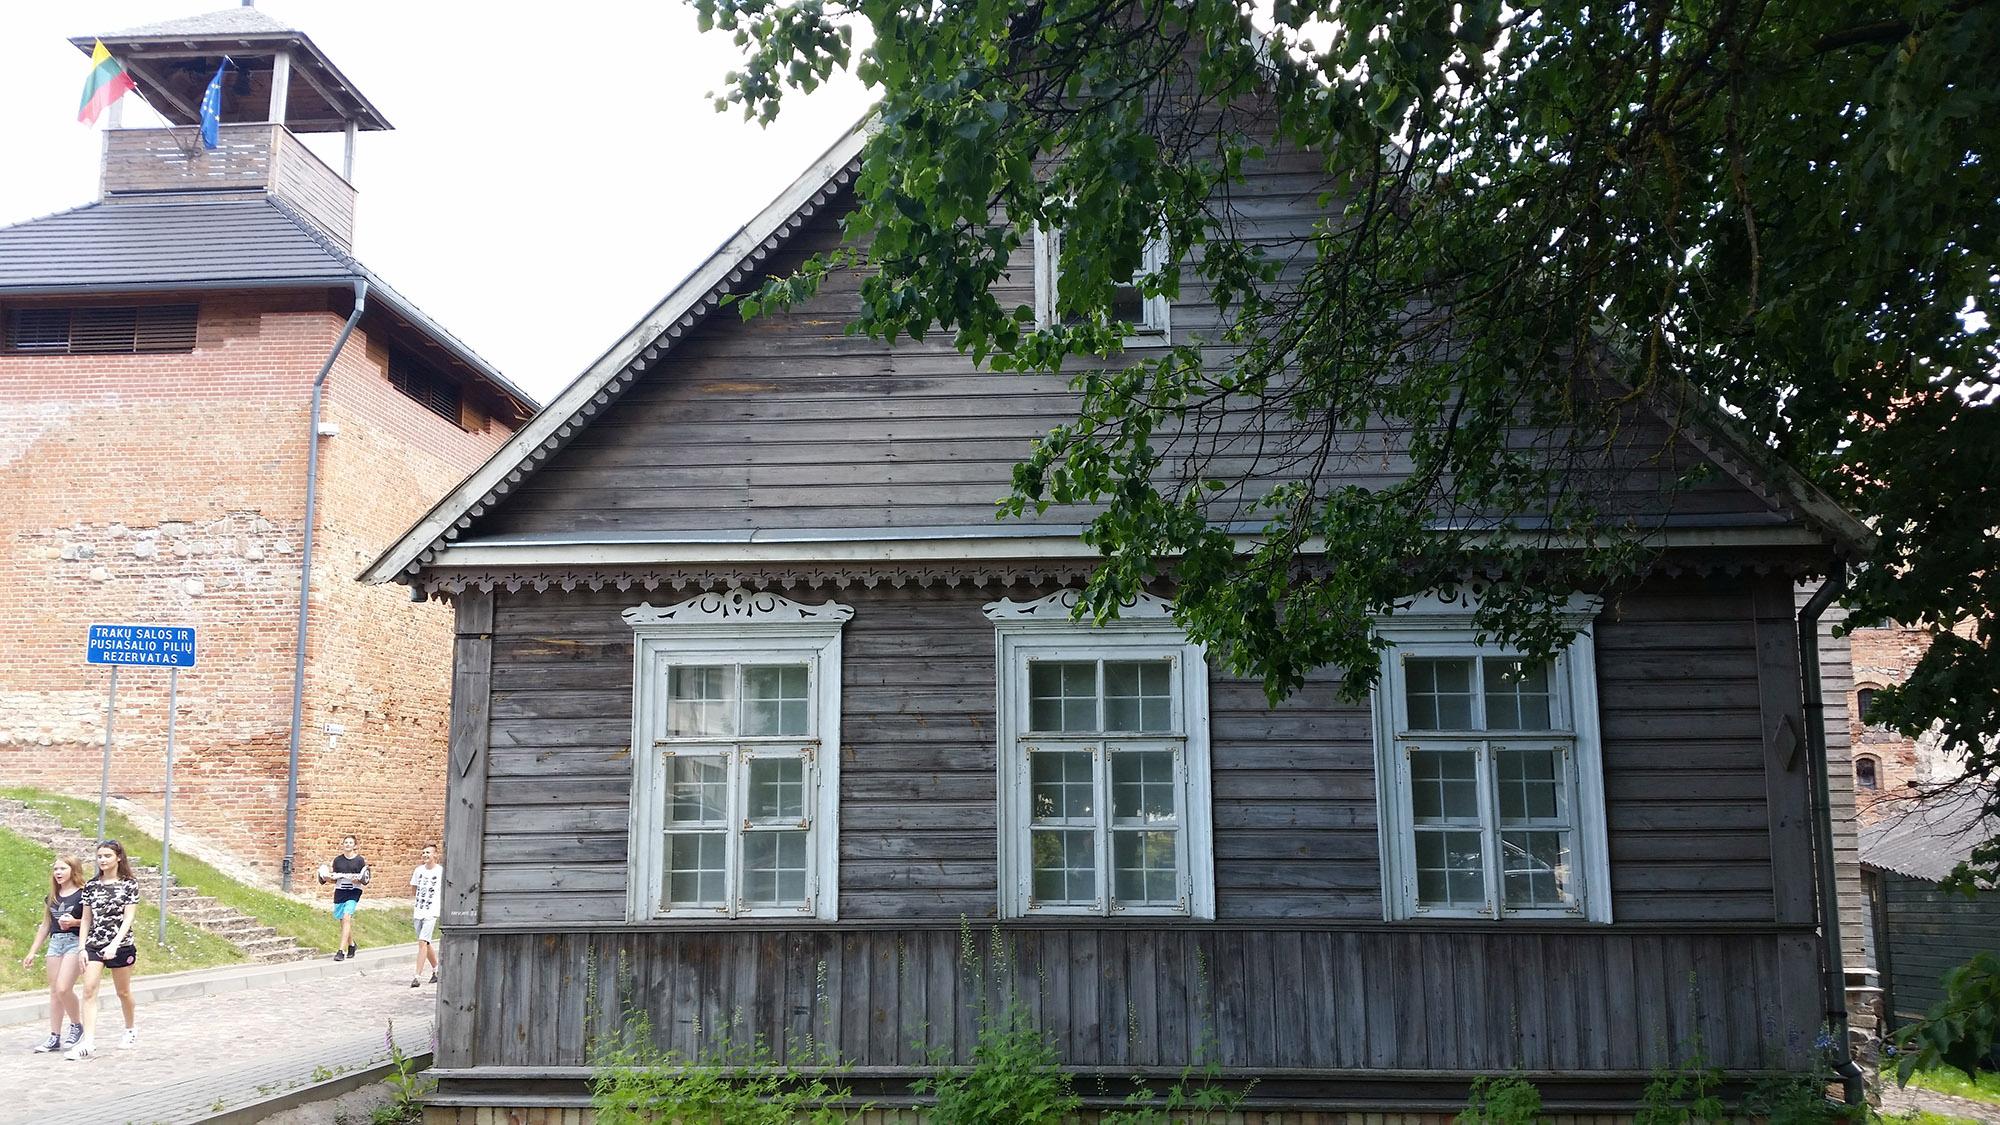 Traditional wooden Karaim houses are seen on the main street in Trakai. - © www.trakai-visit.lt